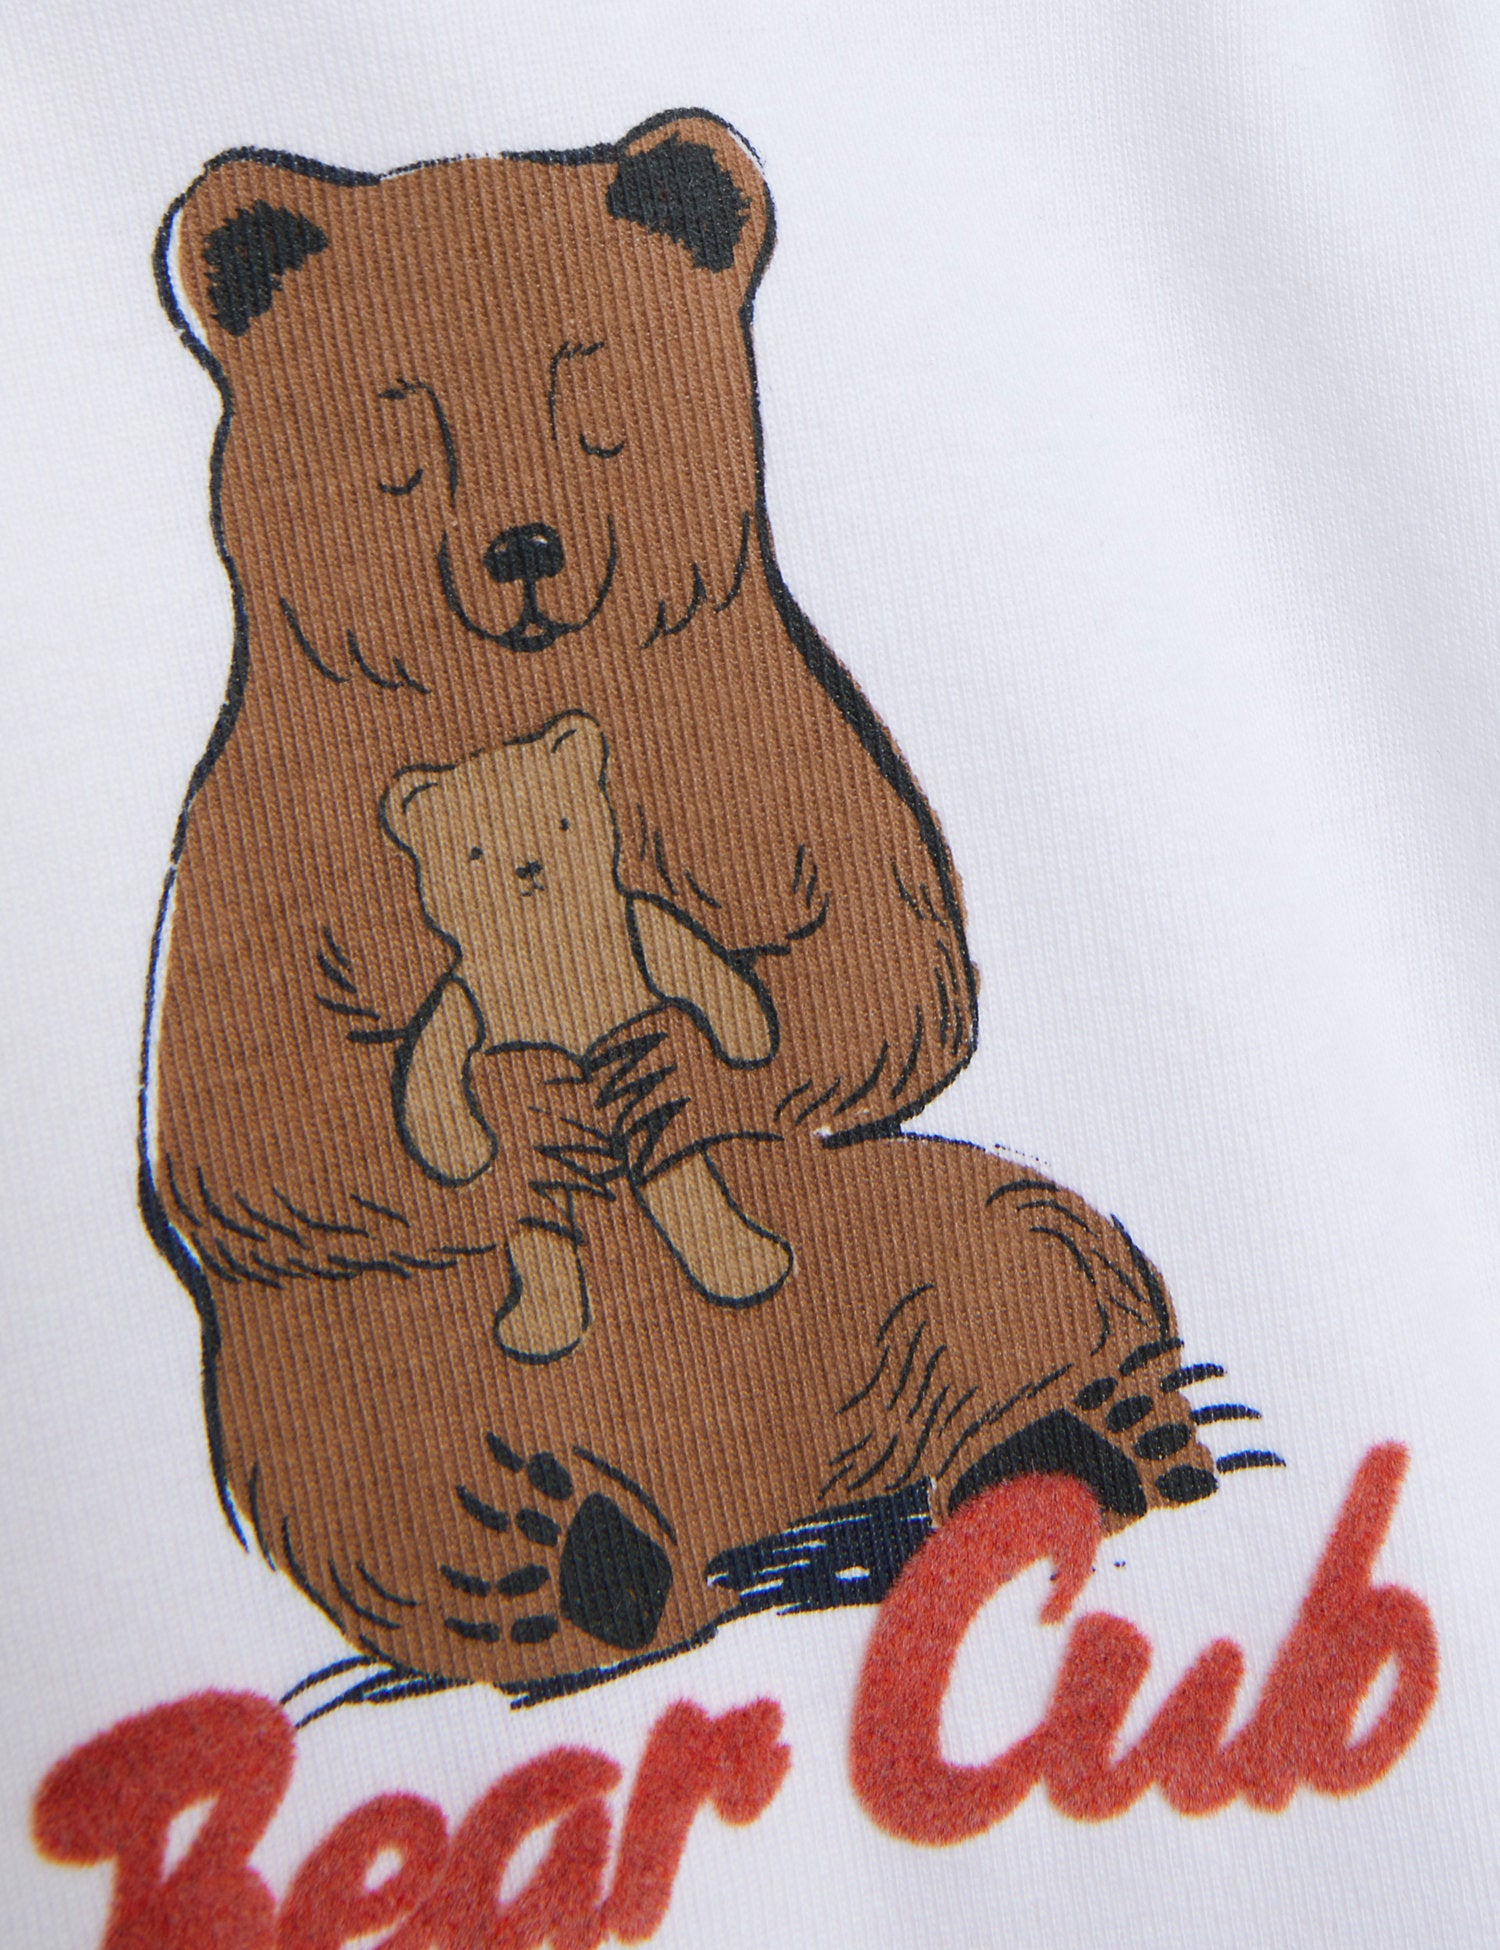 Pure Cotton Bear Cub Slogan Bodysuit